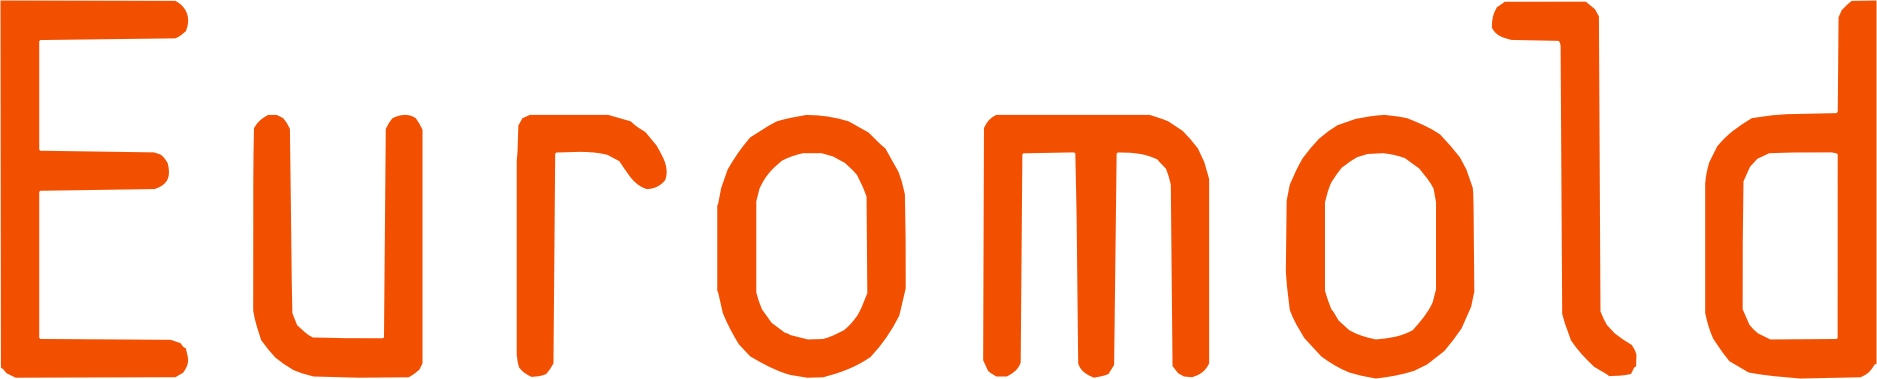 Euromold logo